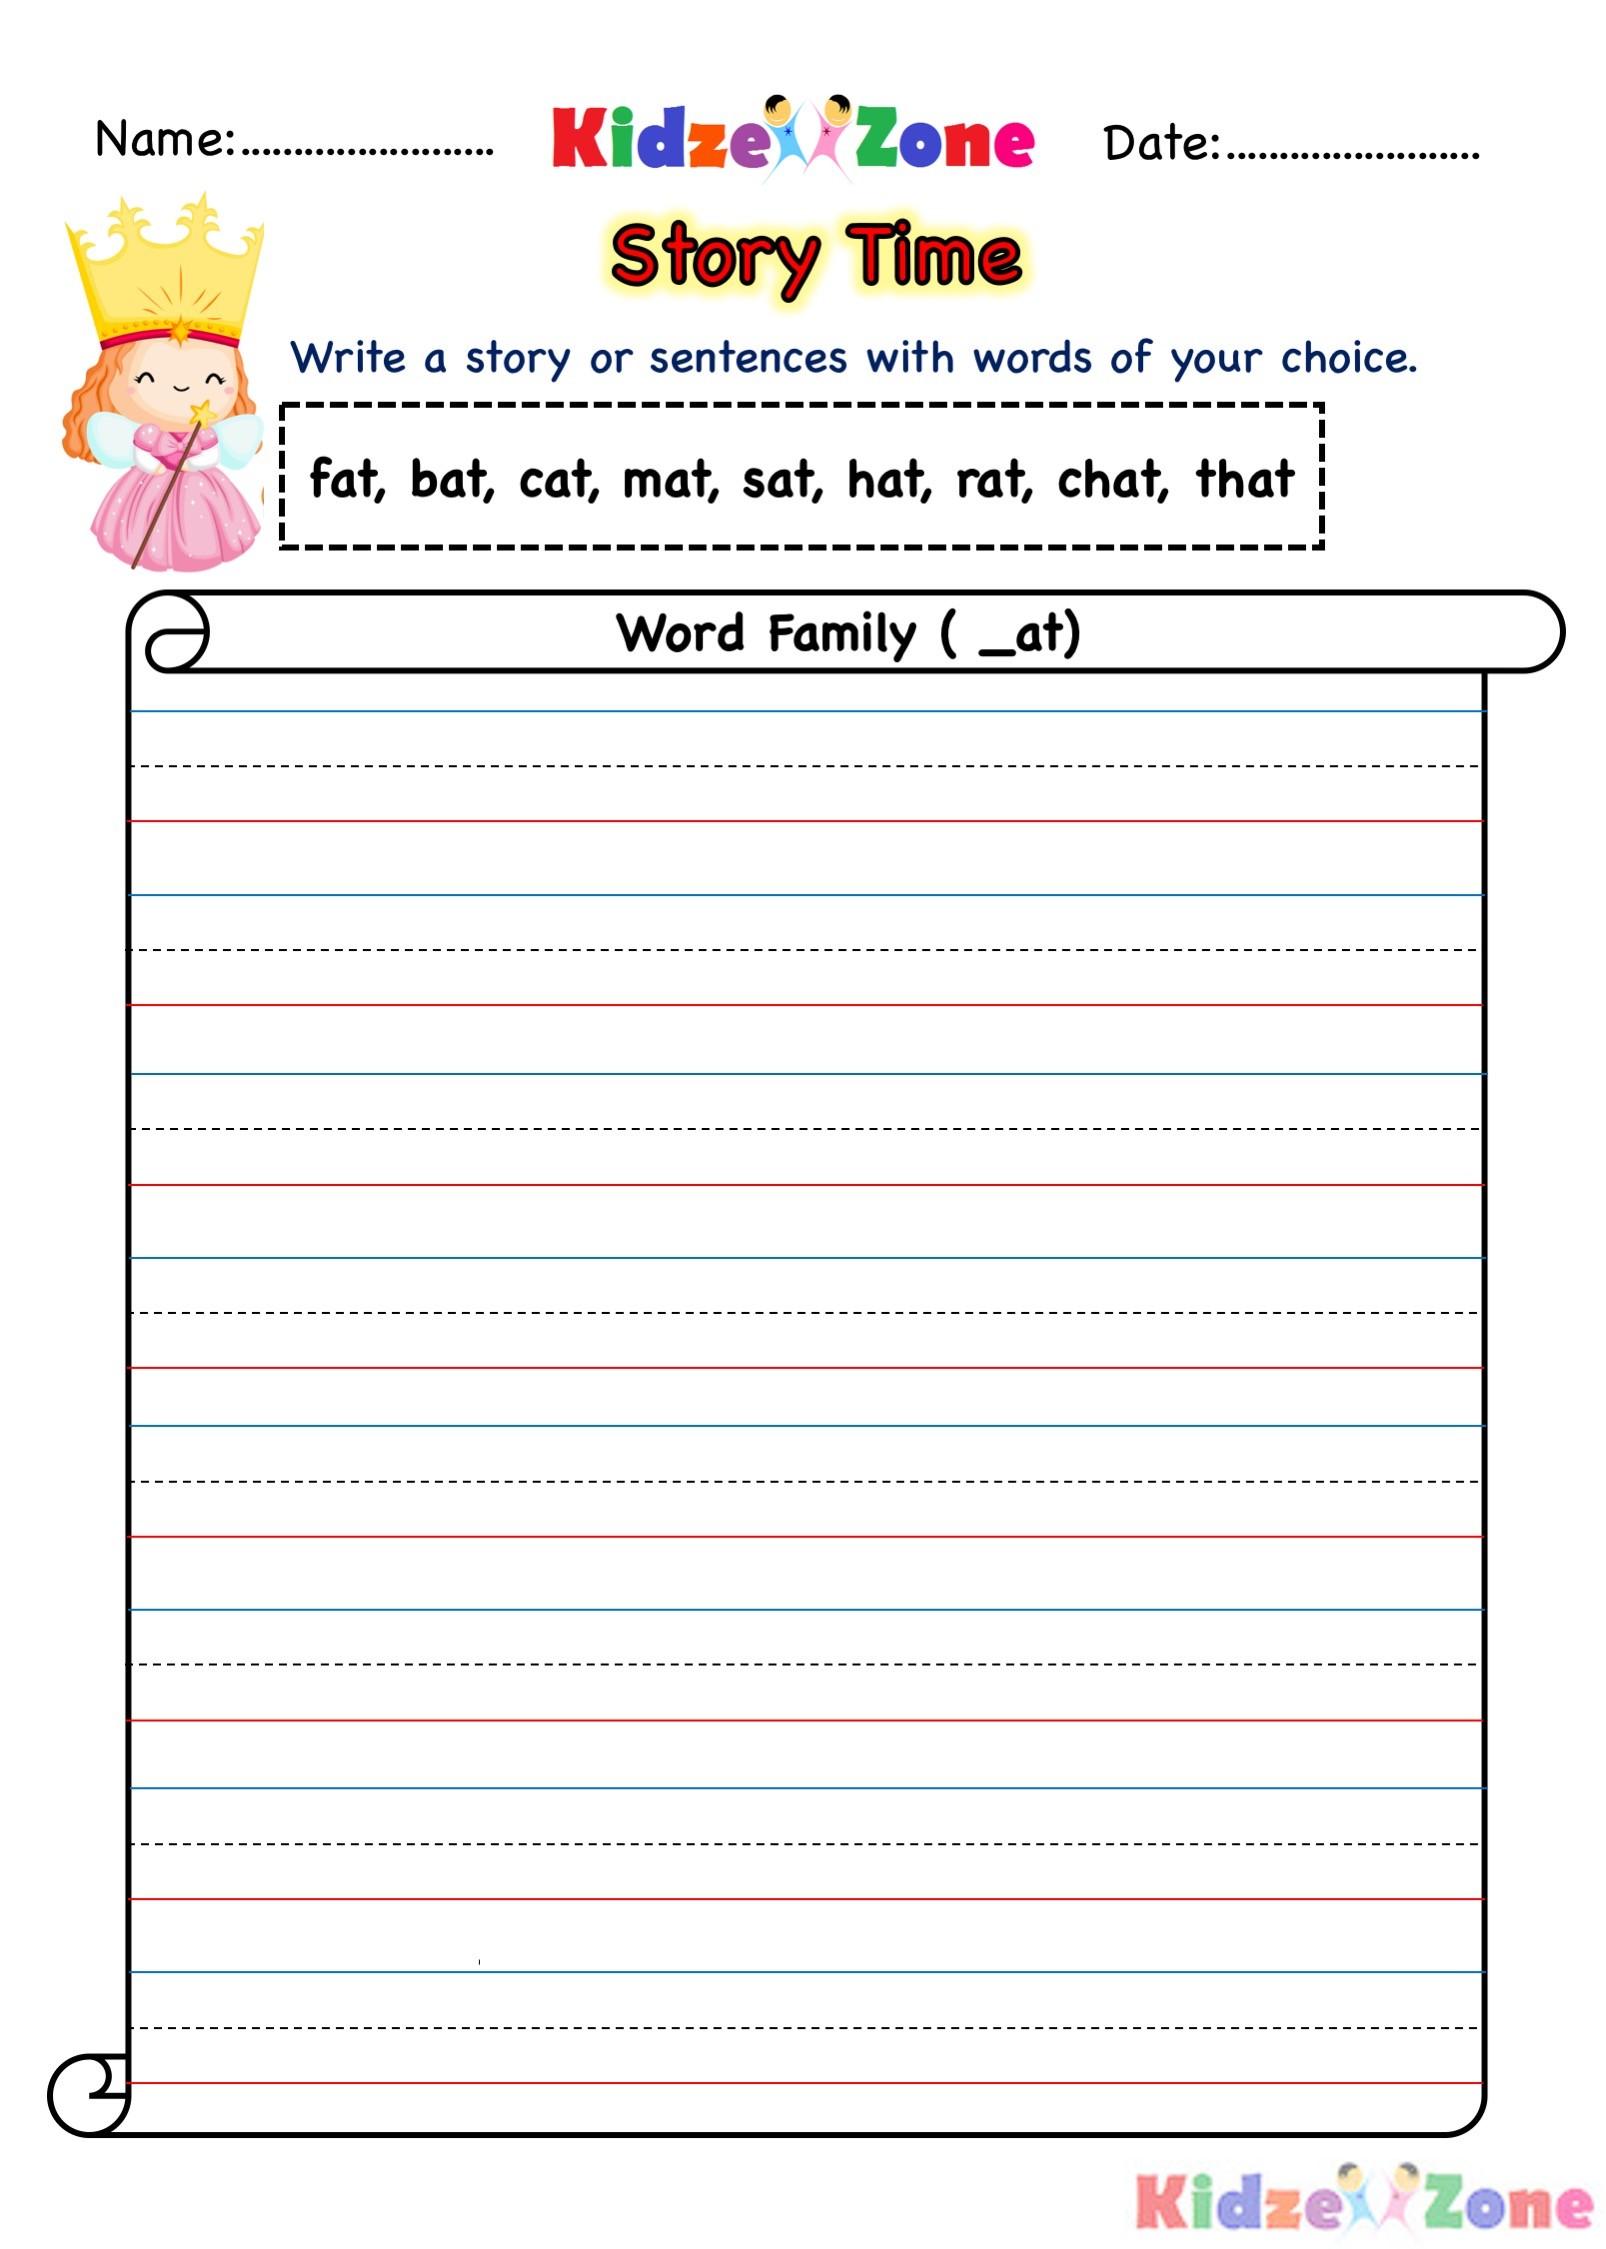 at word family - Story Writing worksheet